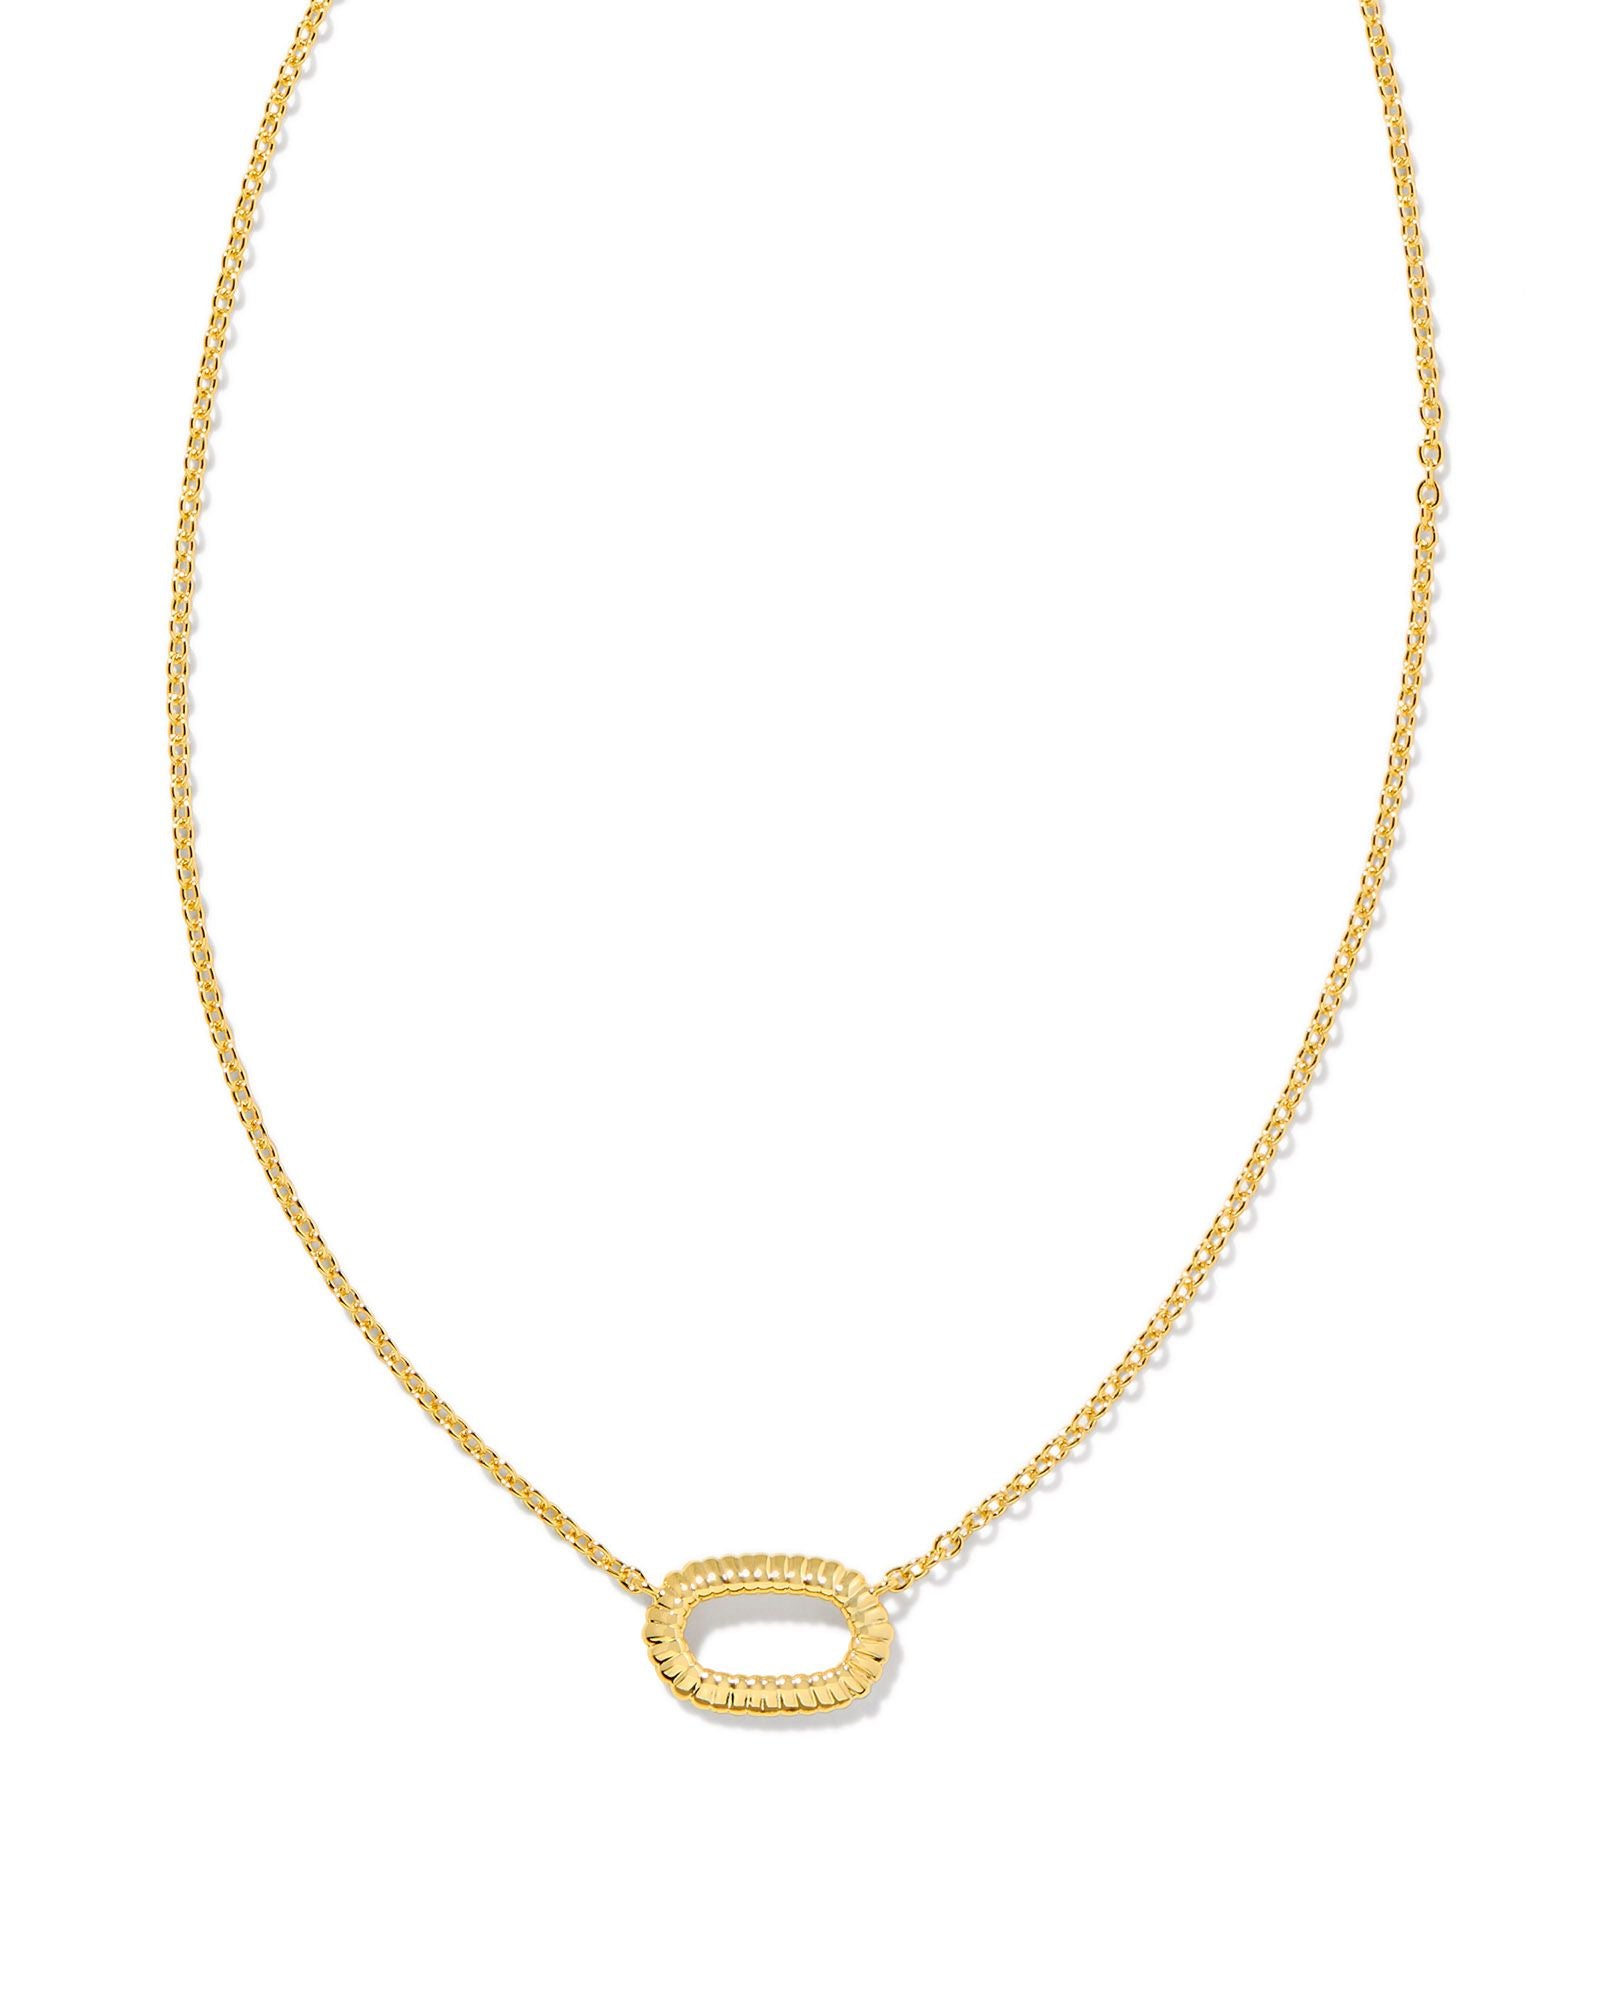 Elisa Ridge Open Framed Necklace in Gold Metal